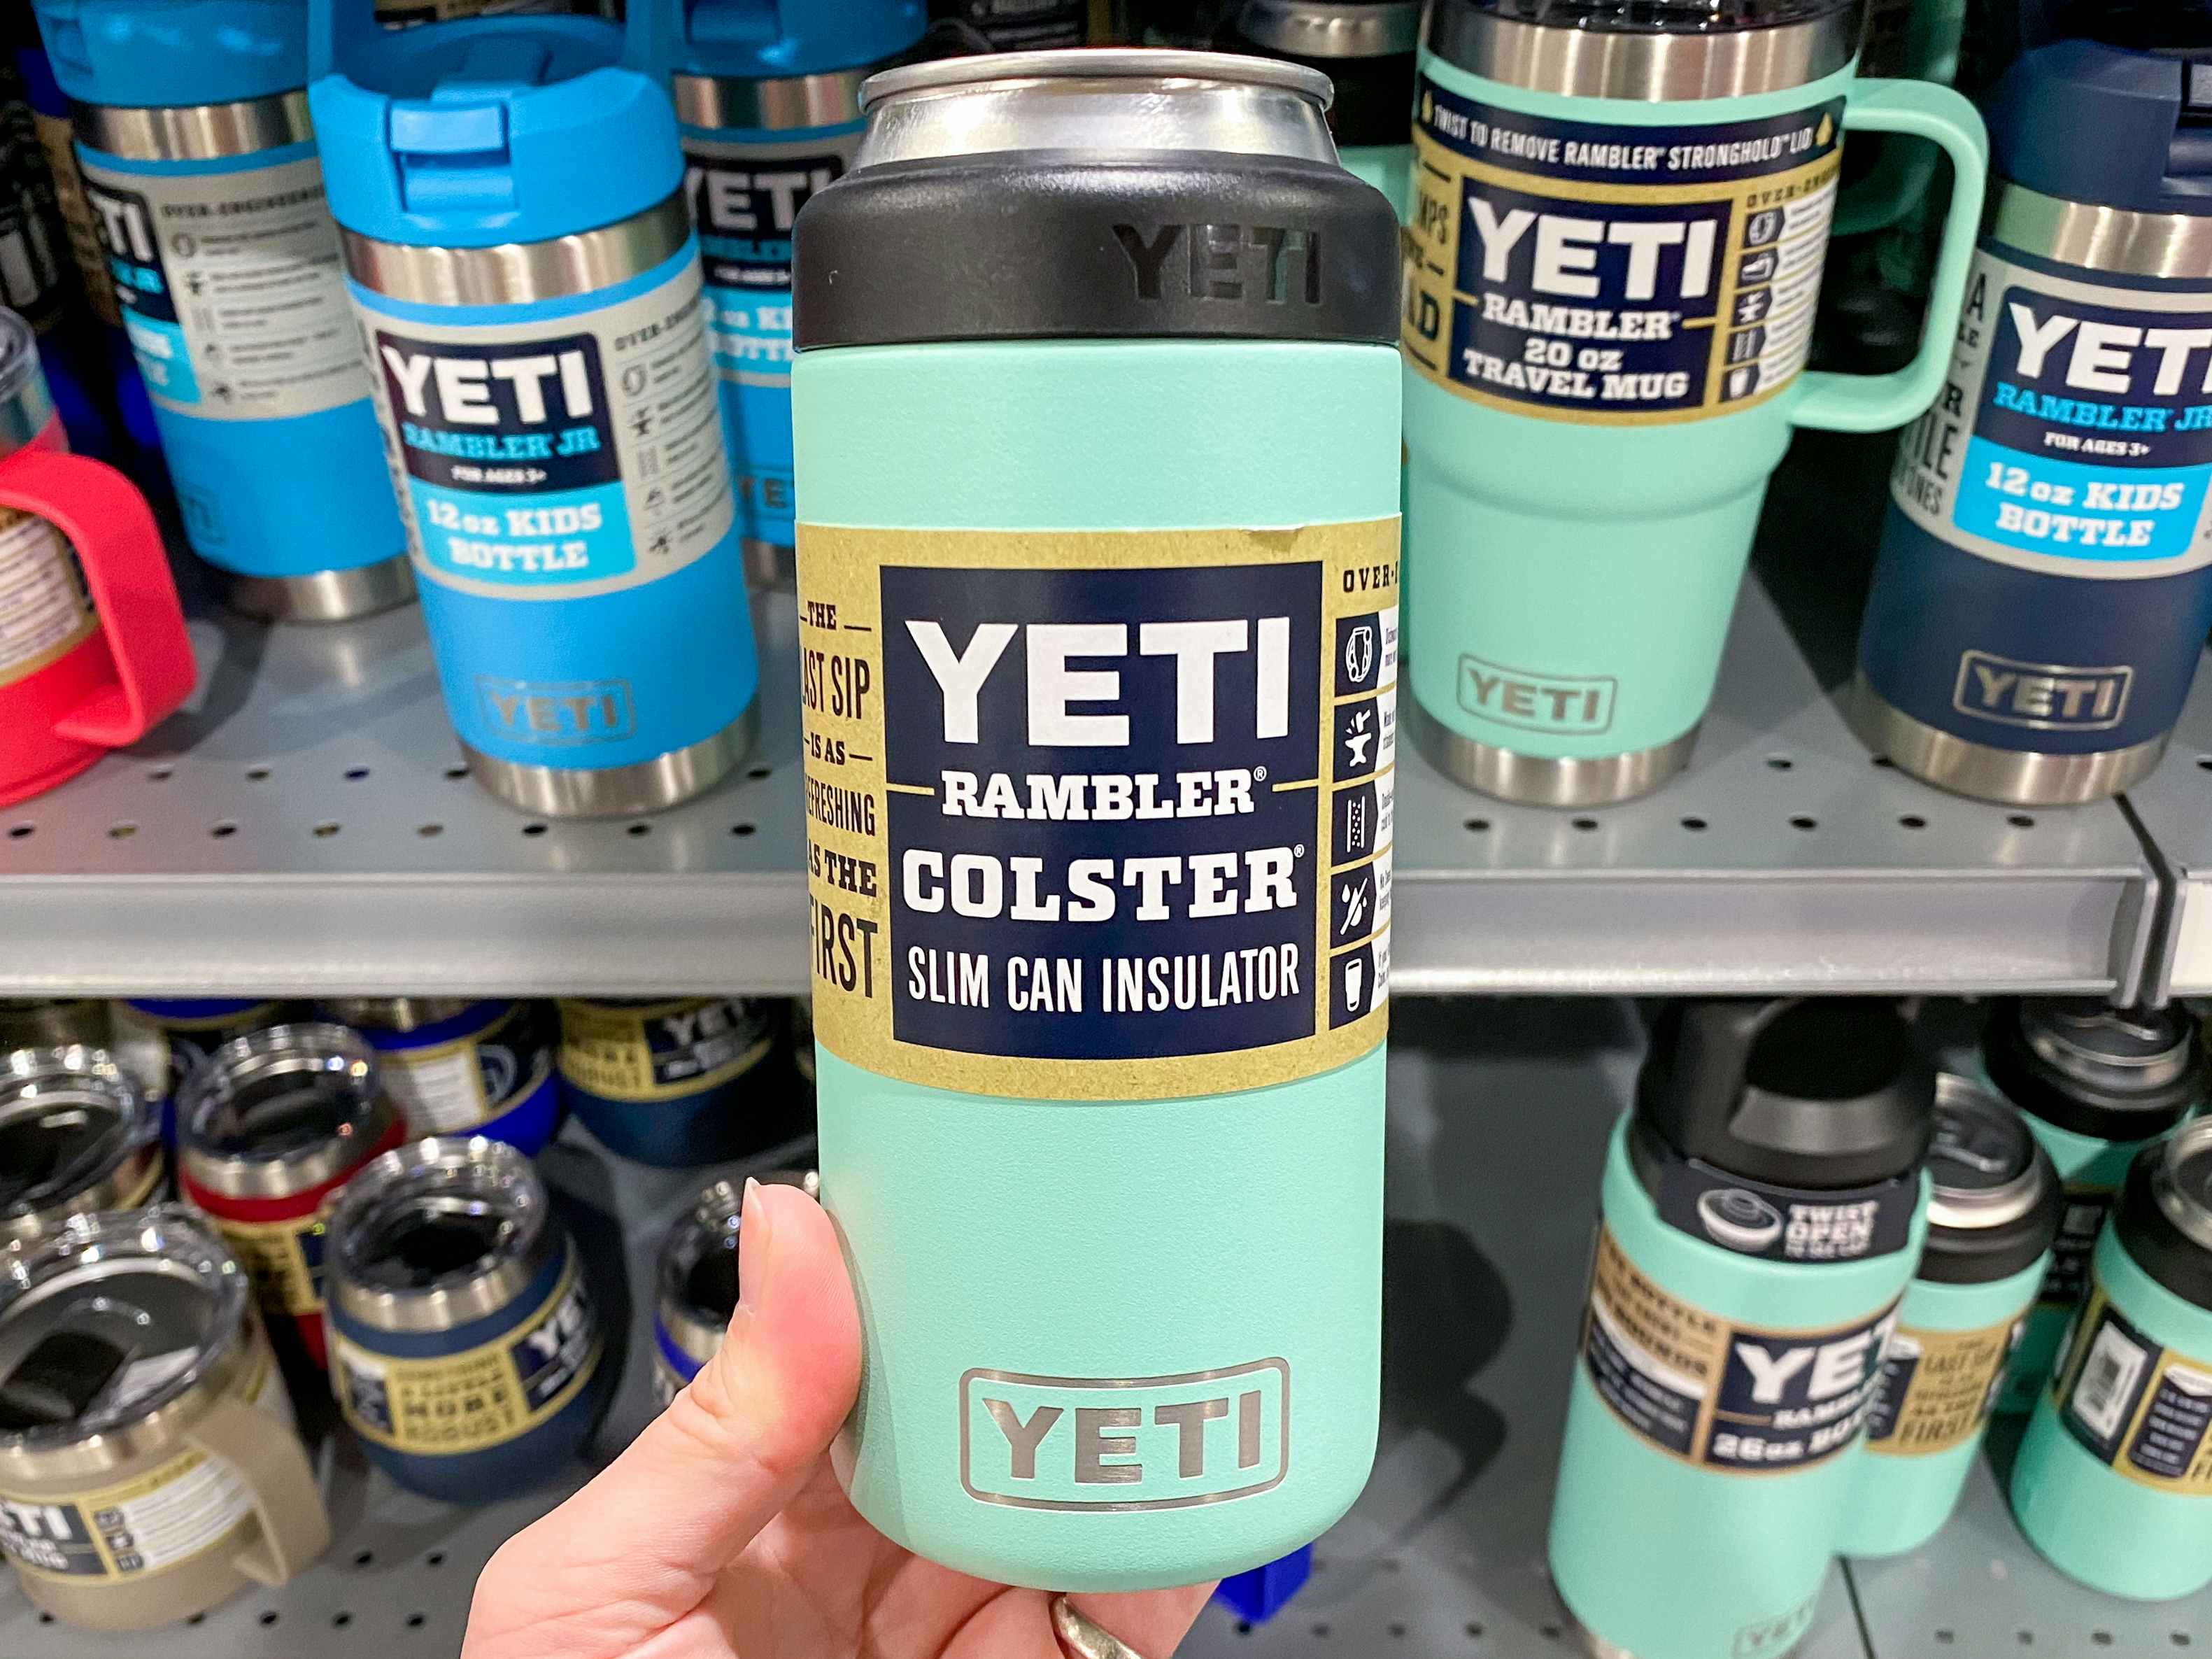 Yeti Cyber Monday Deals 2022: Take 30% Off Yeti Drinkware